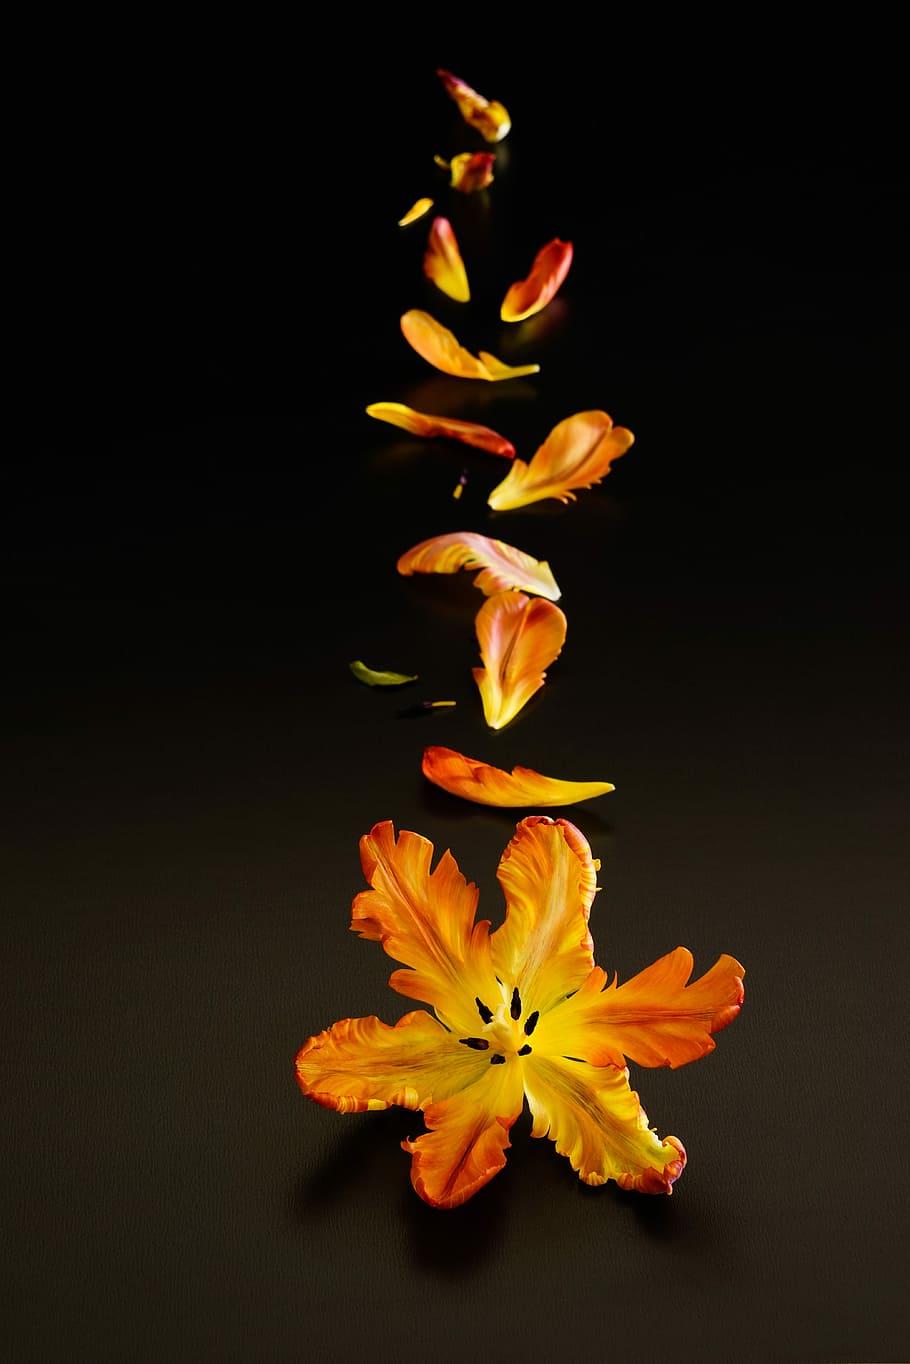 yellow, orange, petaled flowers, falling, still transience of life, tulpenbluete, petals, arrangement, black background, orange-yellow flower